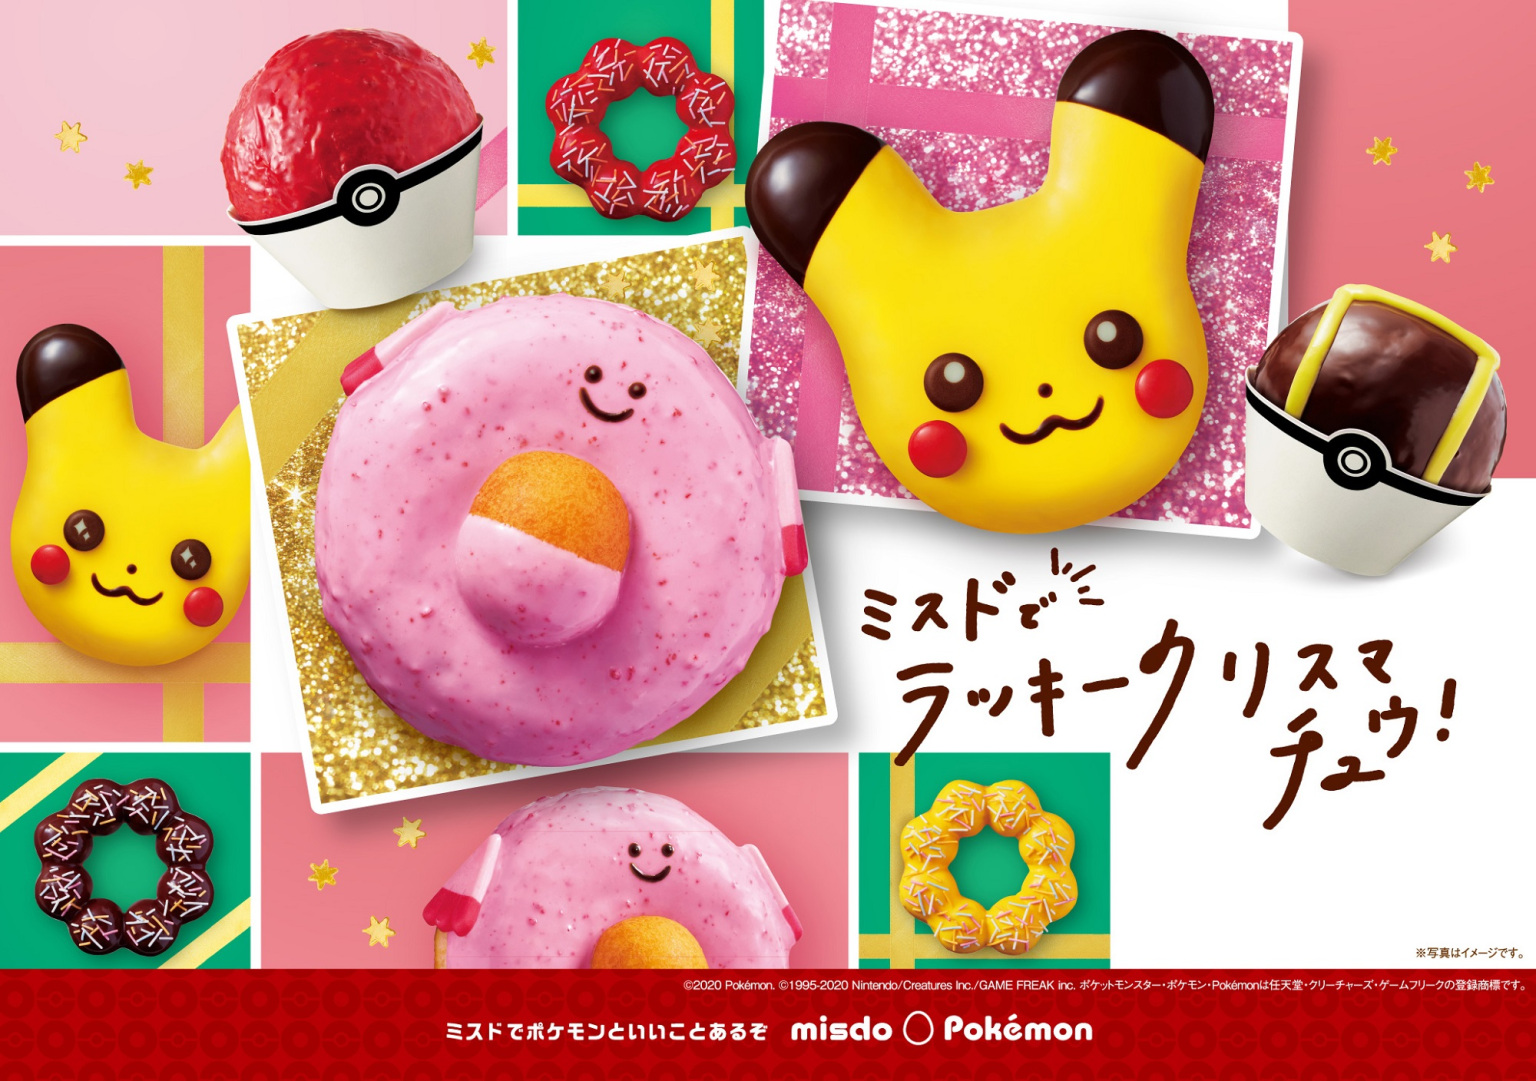 mr donut Natale 2020 Lucky Christmas Pokémon collection